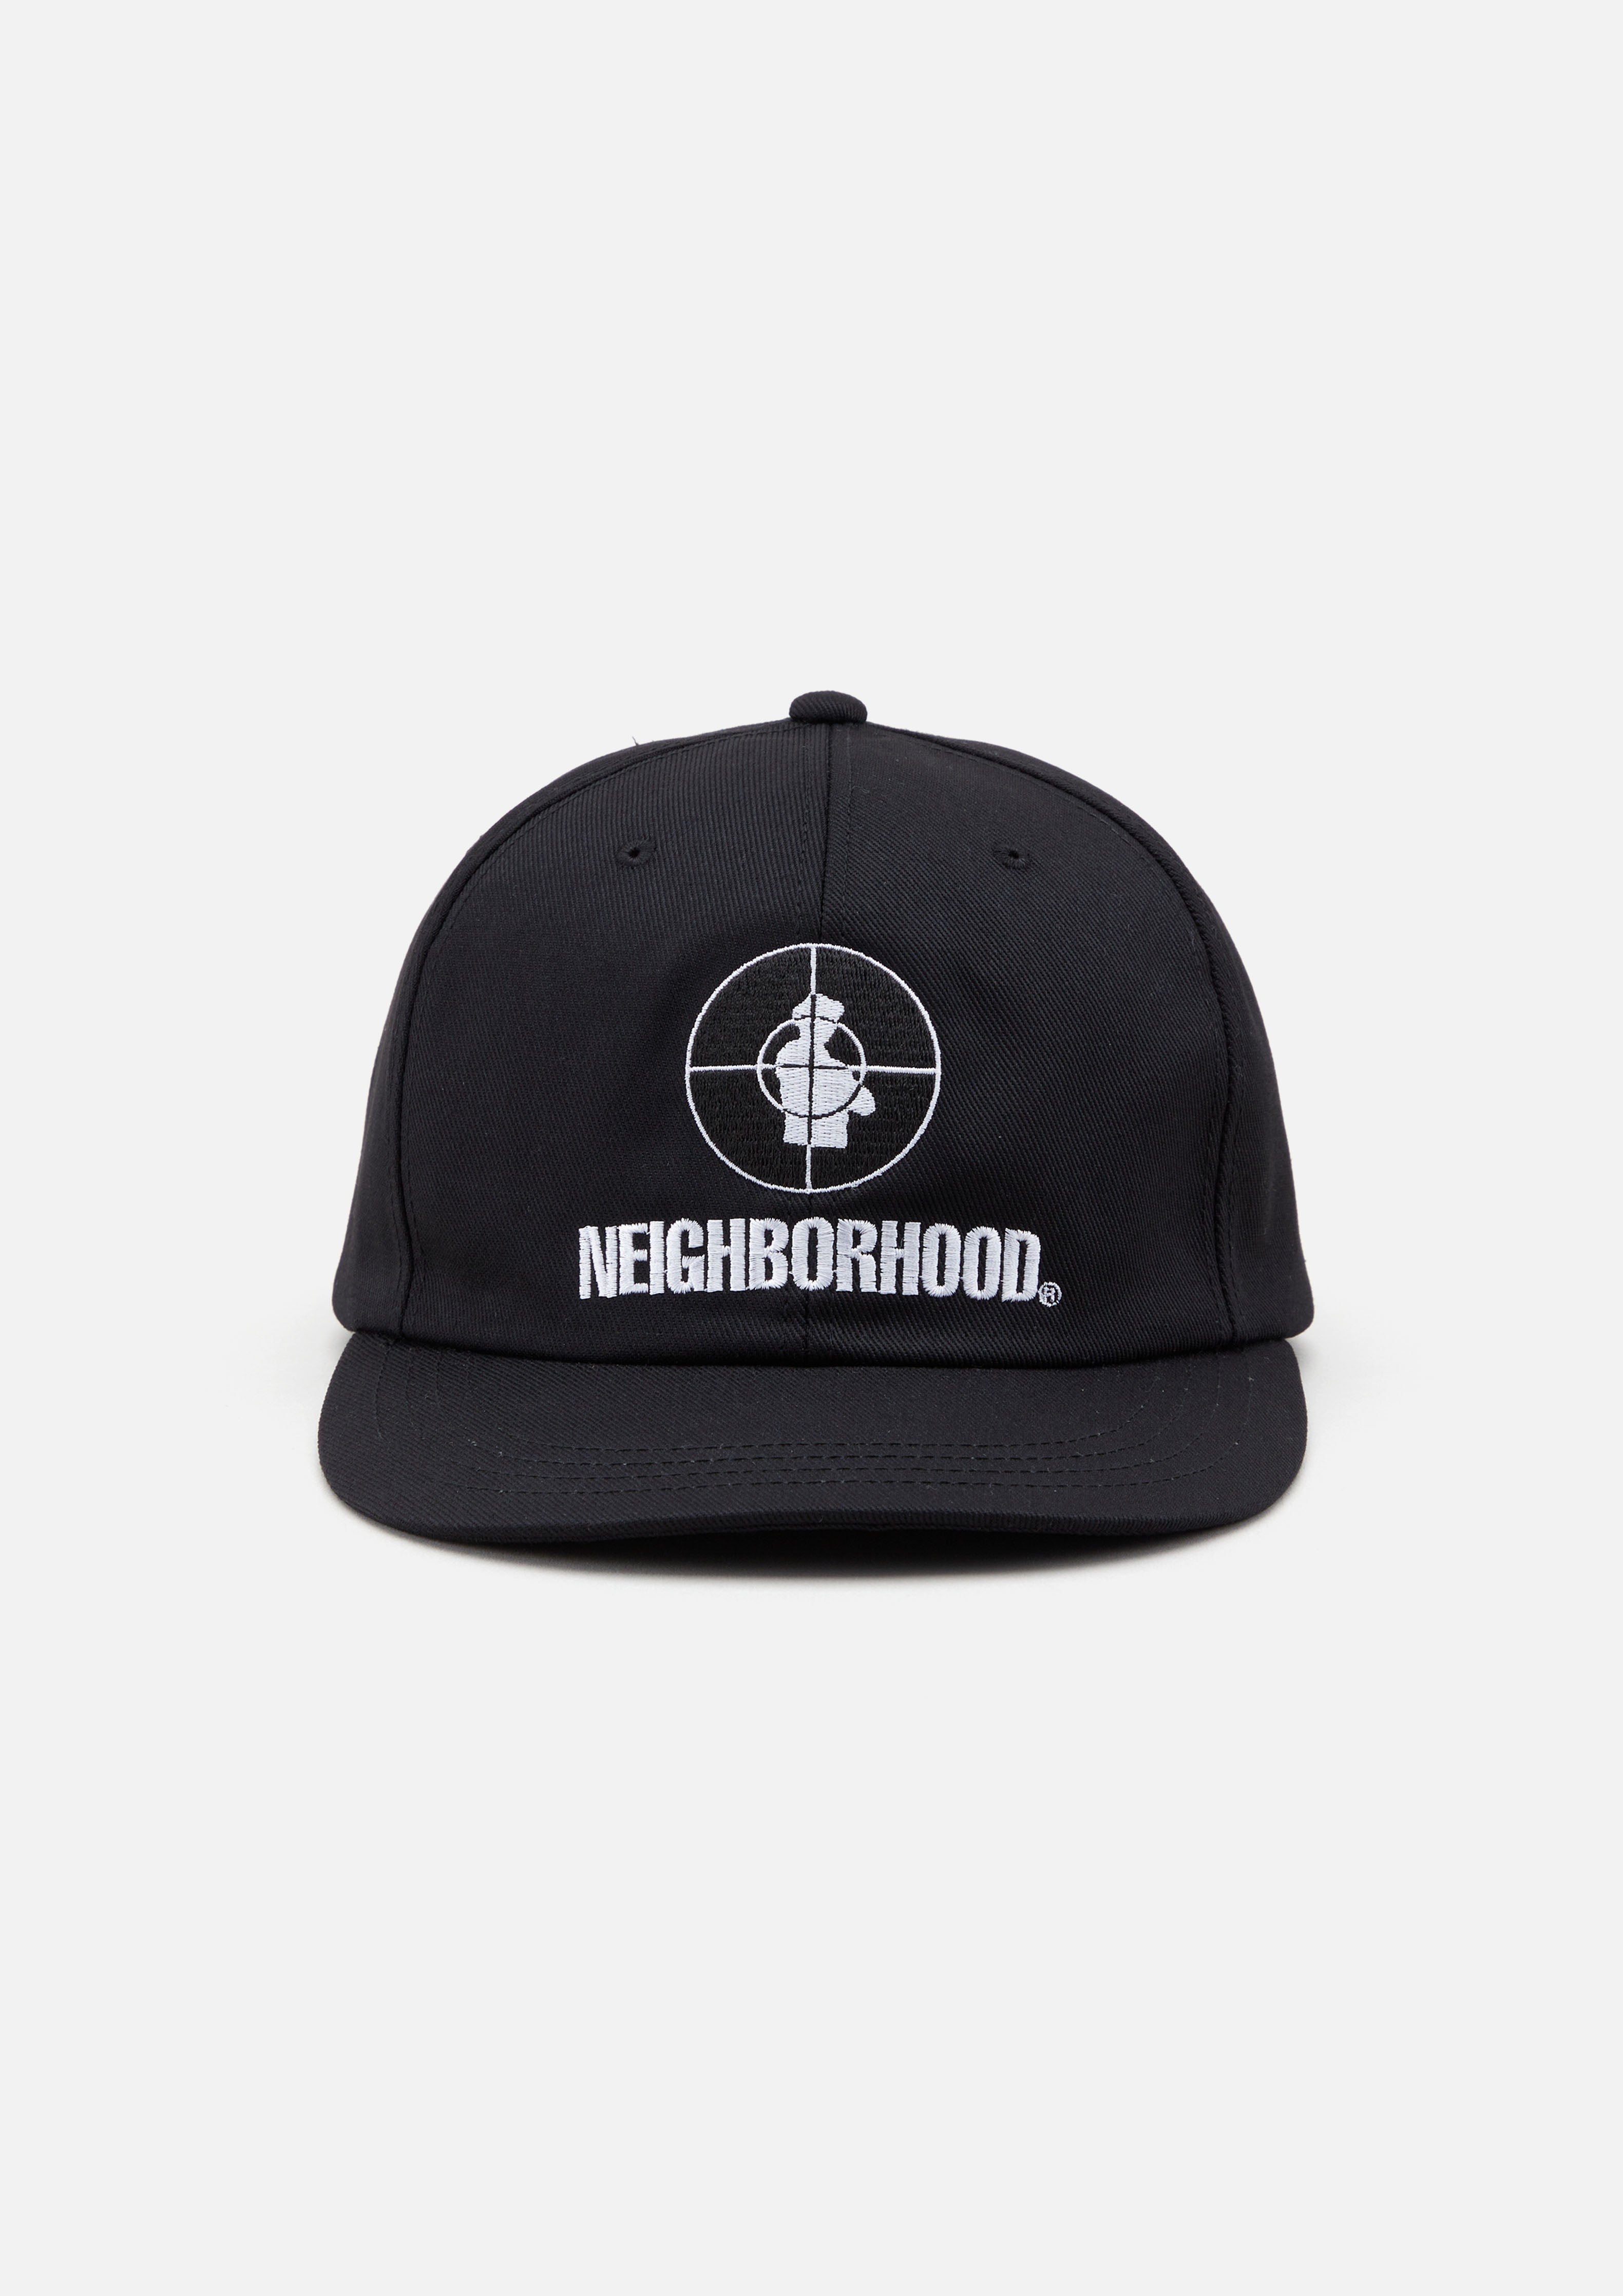 NEIGHBORHOOD X PUBLIC ENEMY BASEBALL CAP